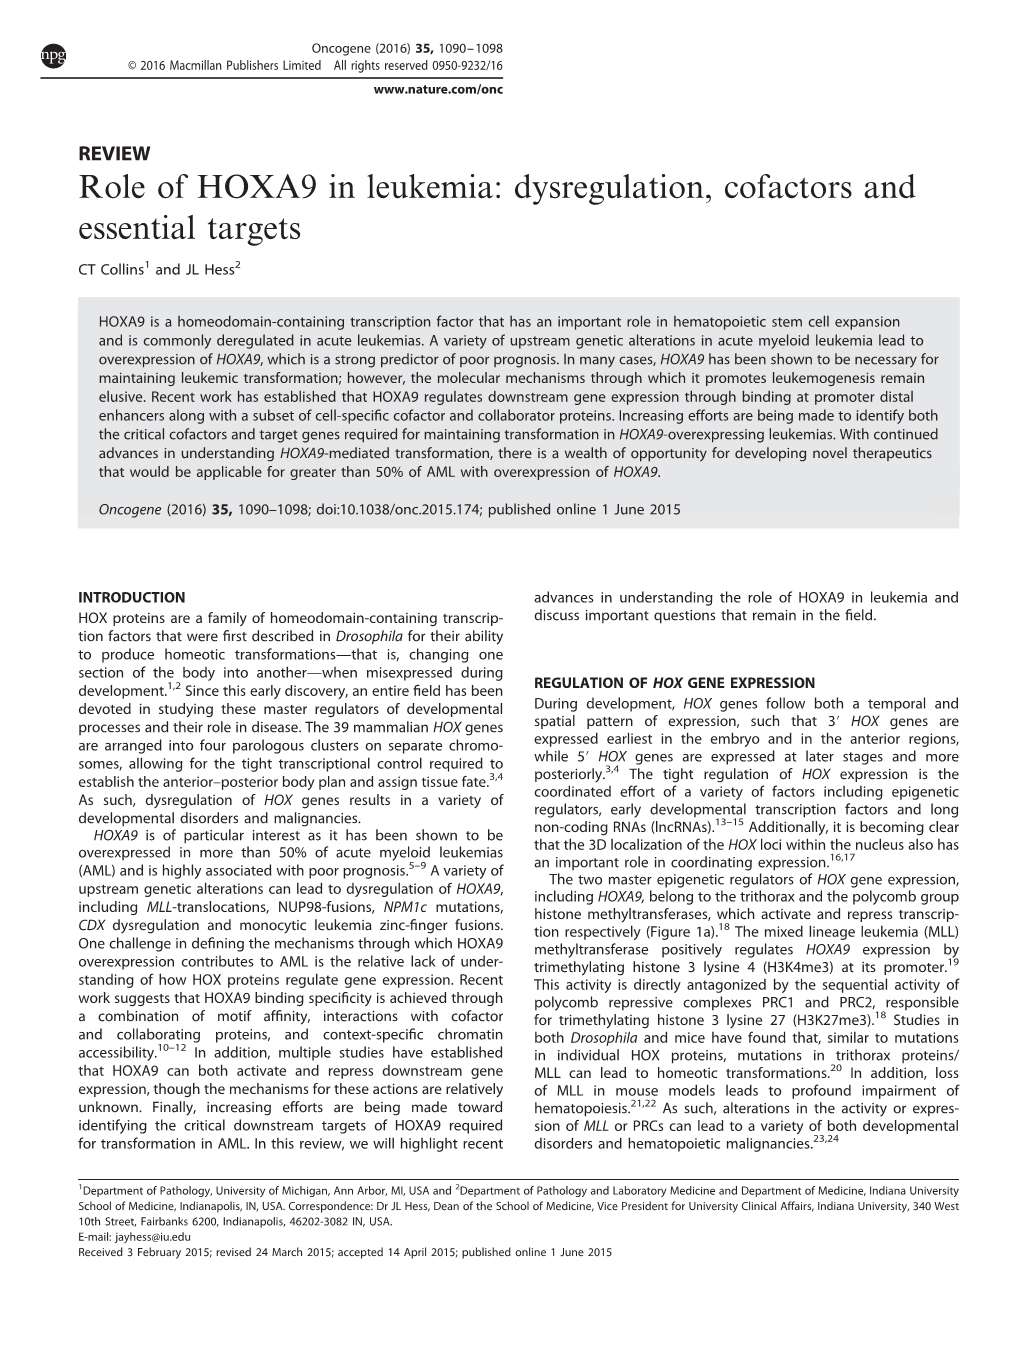 Role of HOXA9 in Leukemia: Dysregulation, Cofactors and Essential Targets